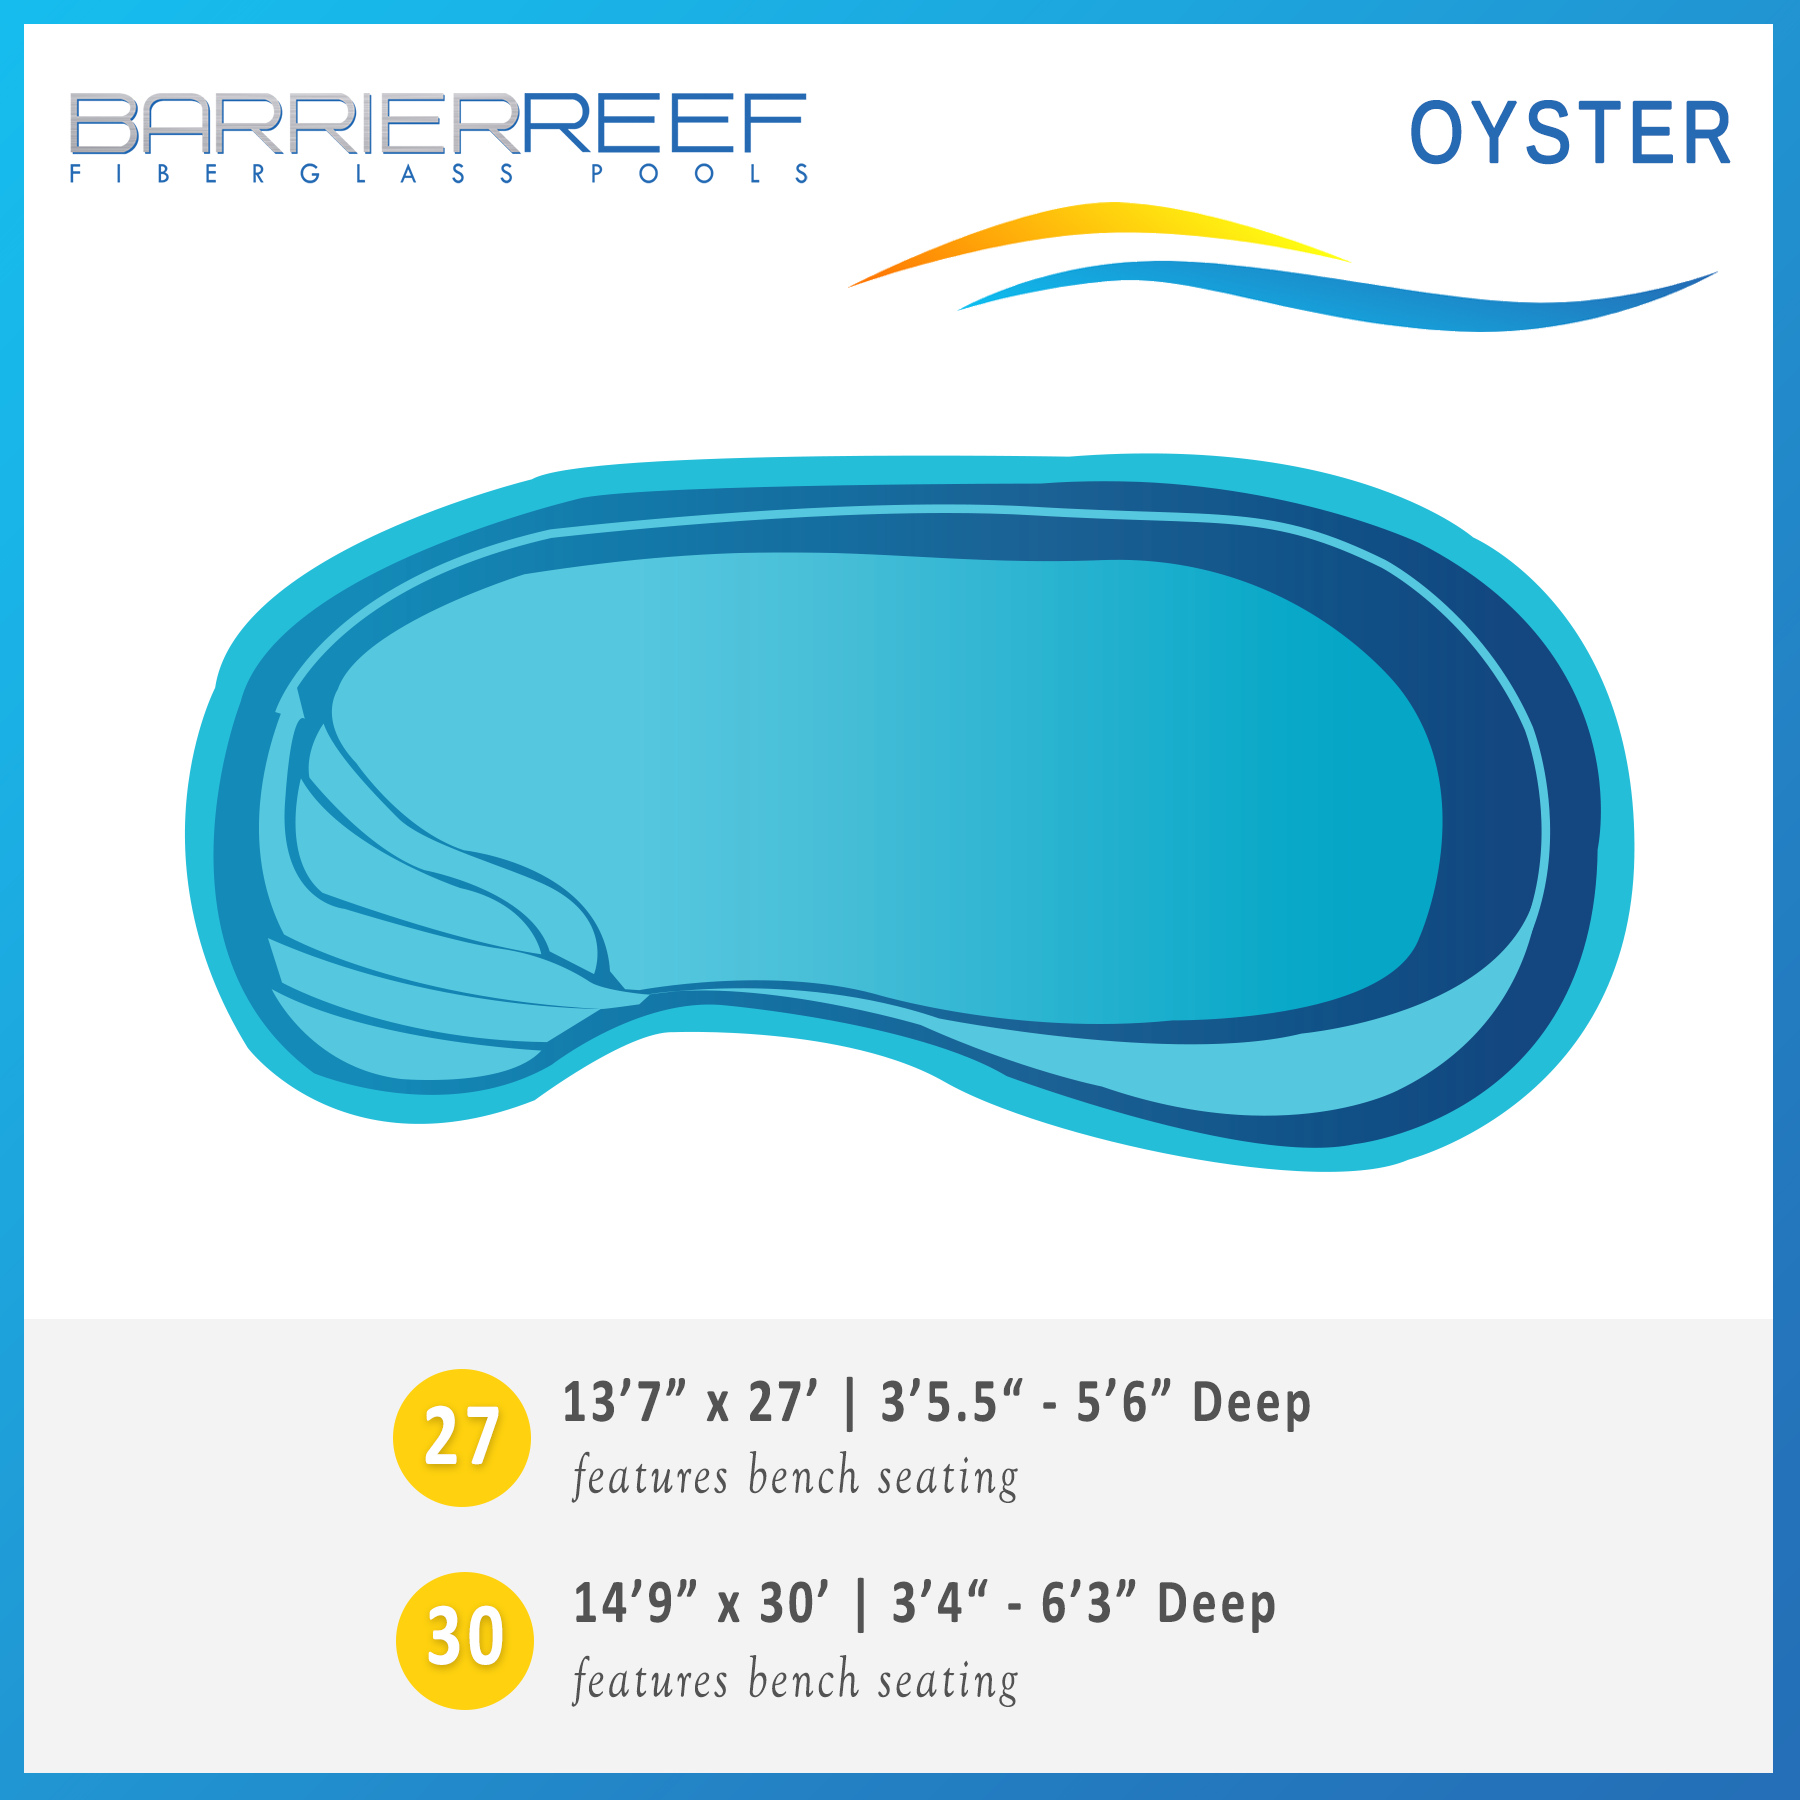 Oyster Barrier Reef Fiberglass Pool